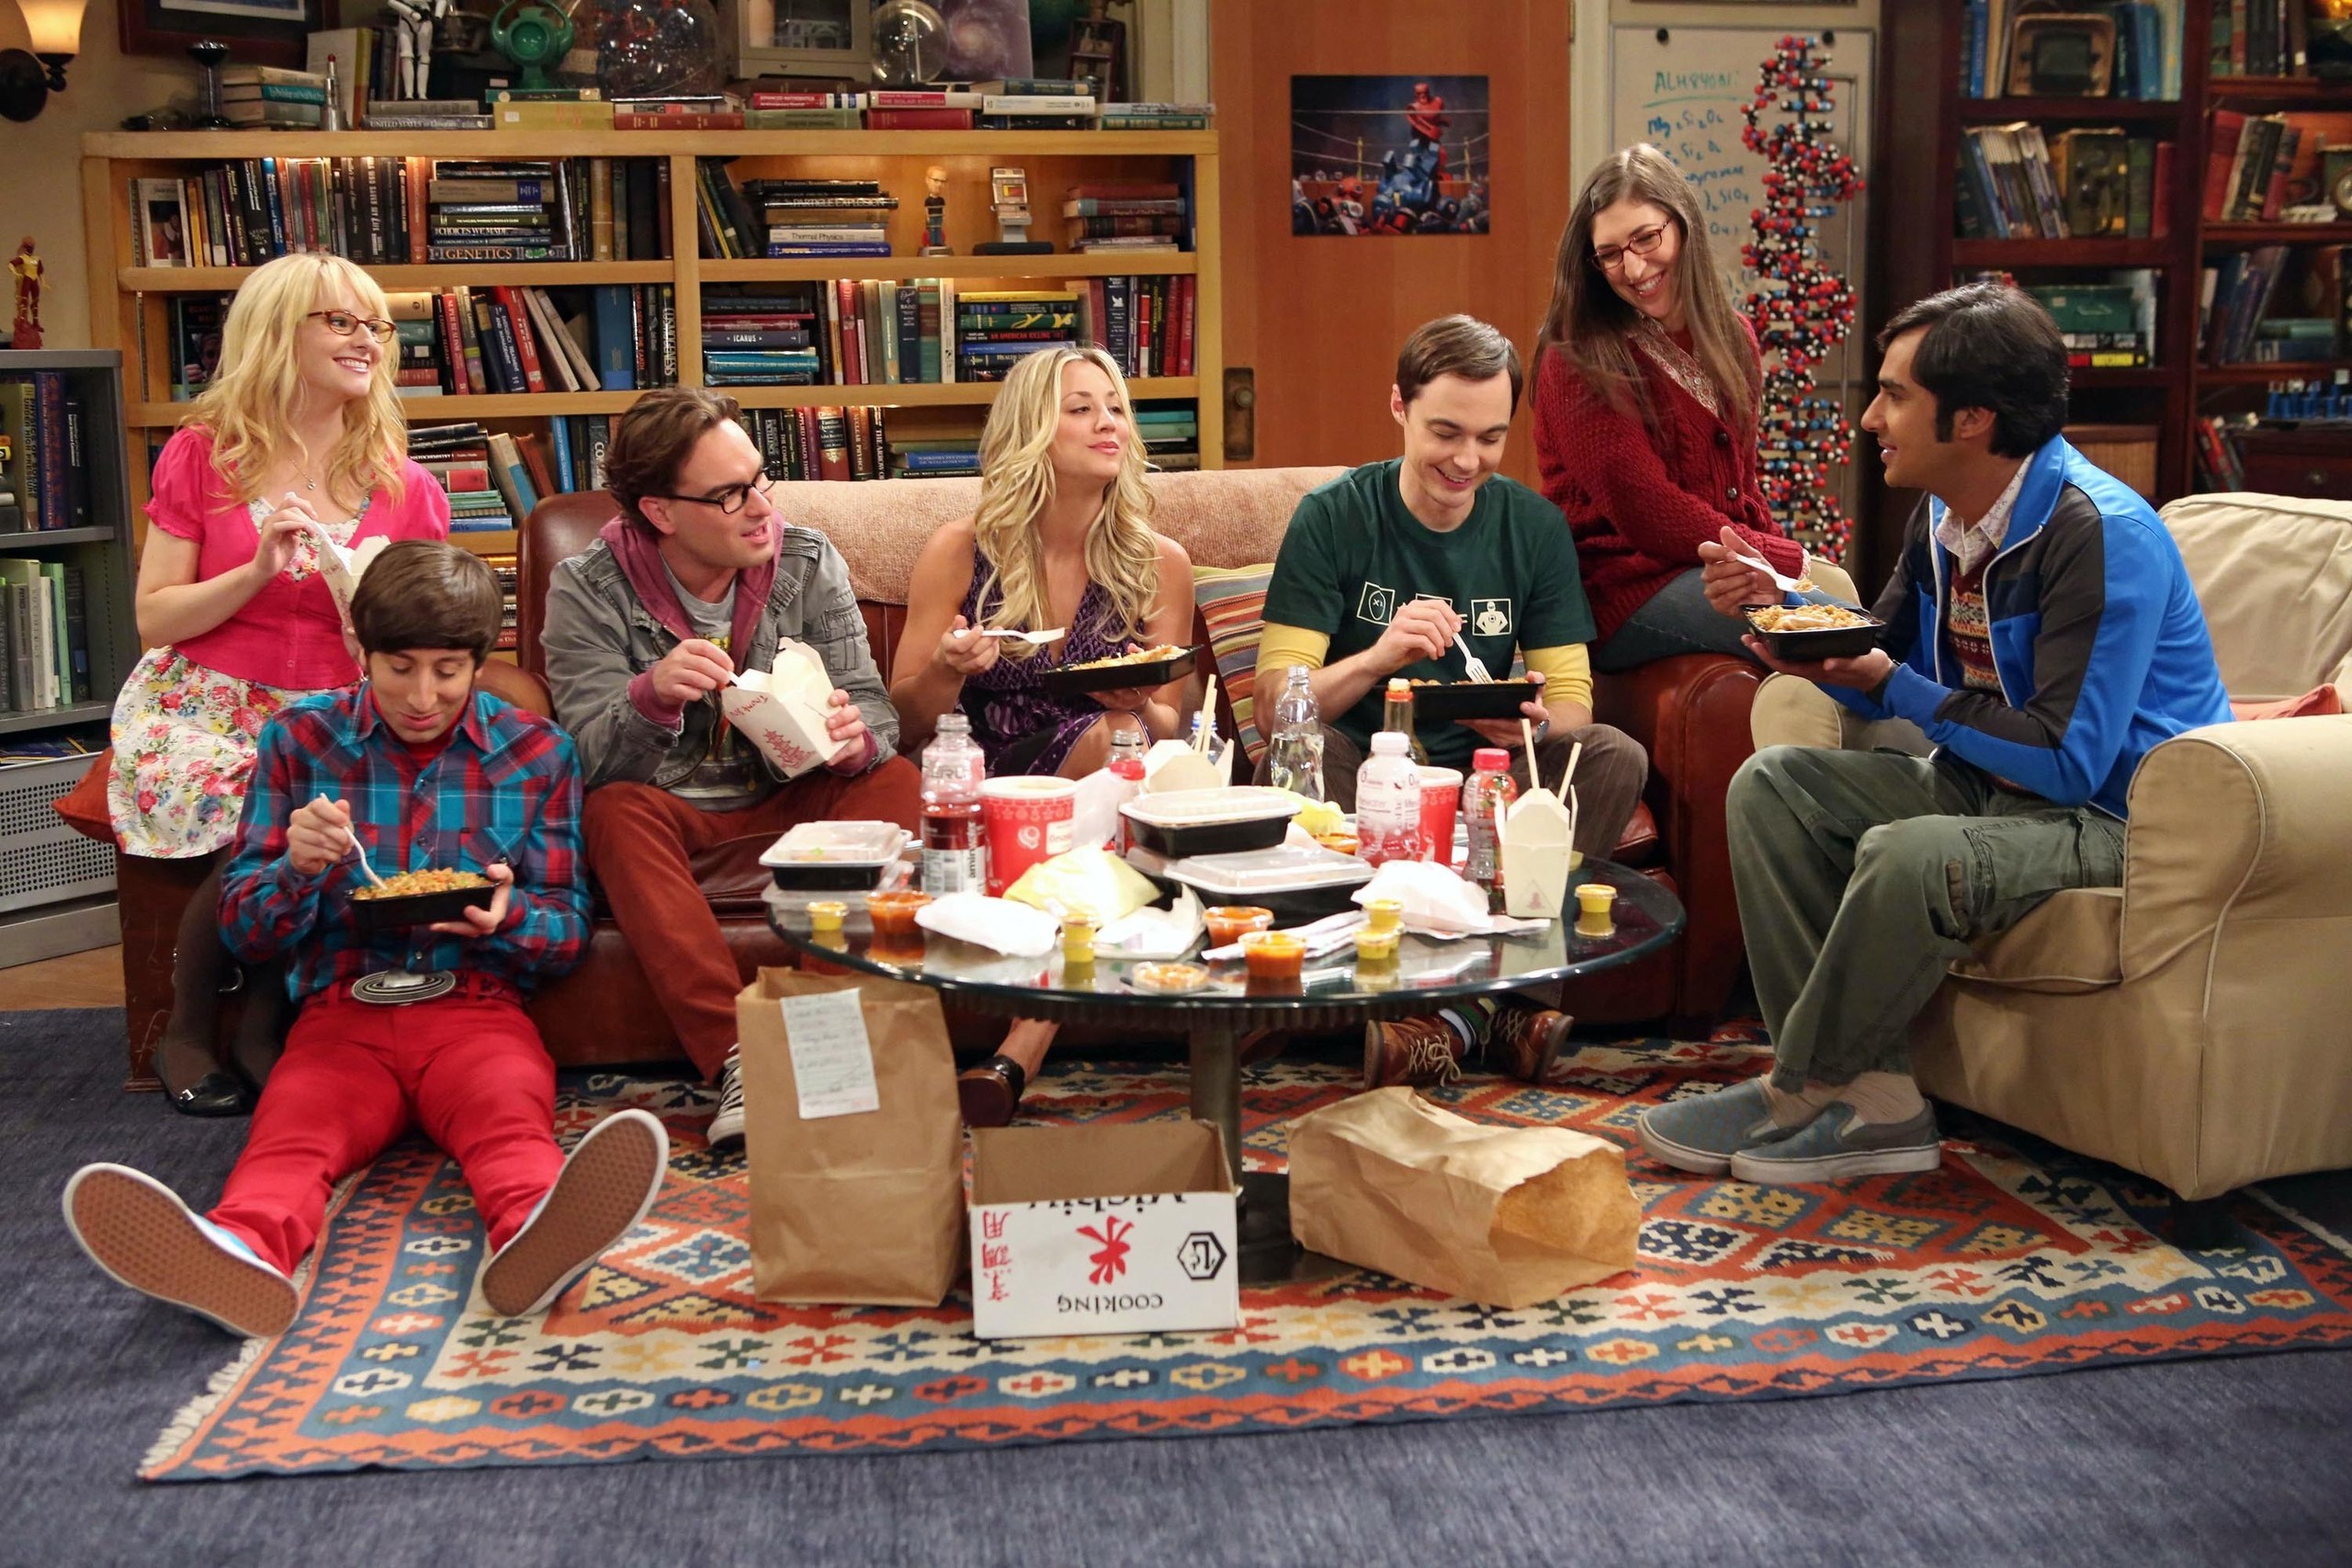 The Big Bang Theory HD Wallpaper And Background